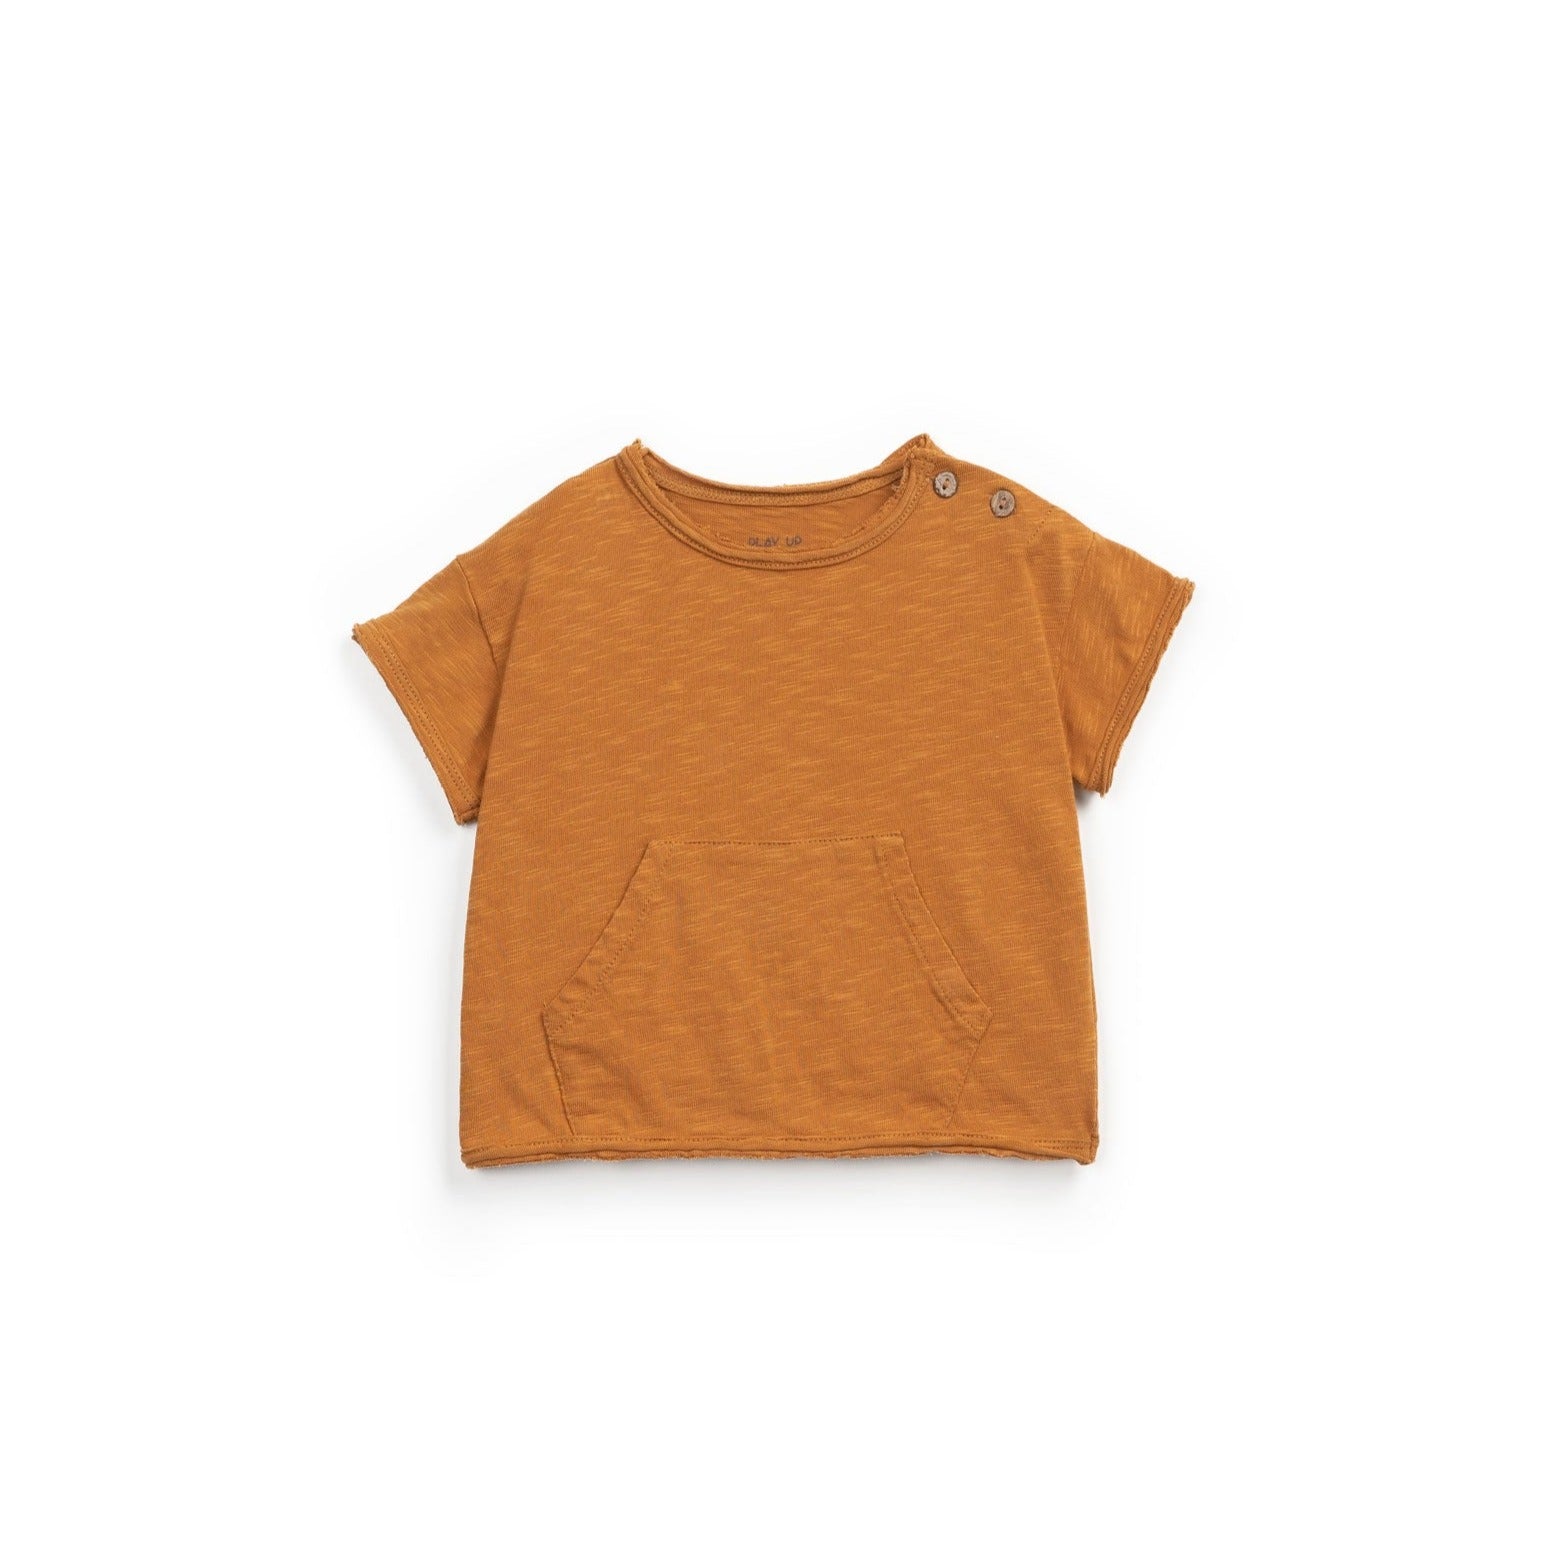 T-shirt with brick pocket - Play Up